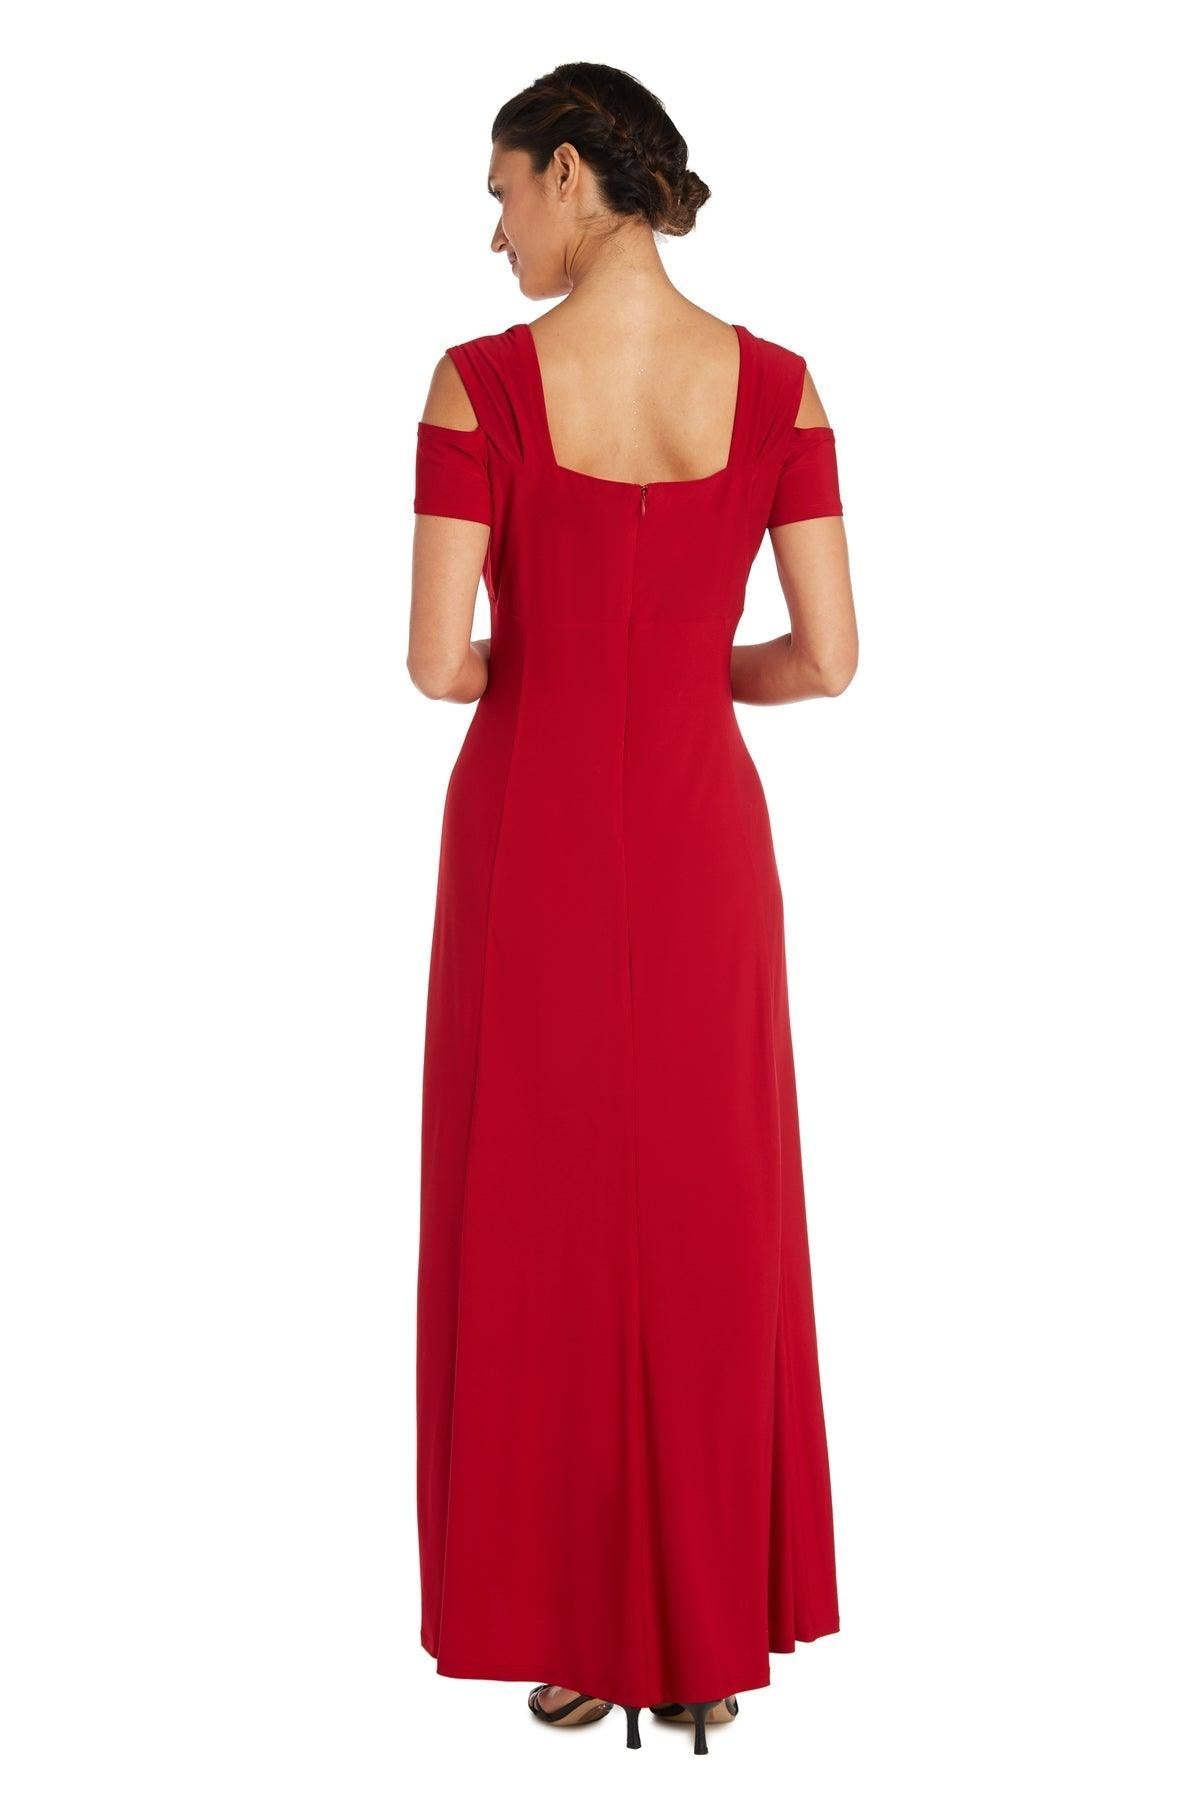 R&M Richards Evening Long Formal Dress Sale 1367 - The Dress Outlet